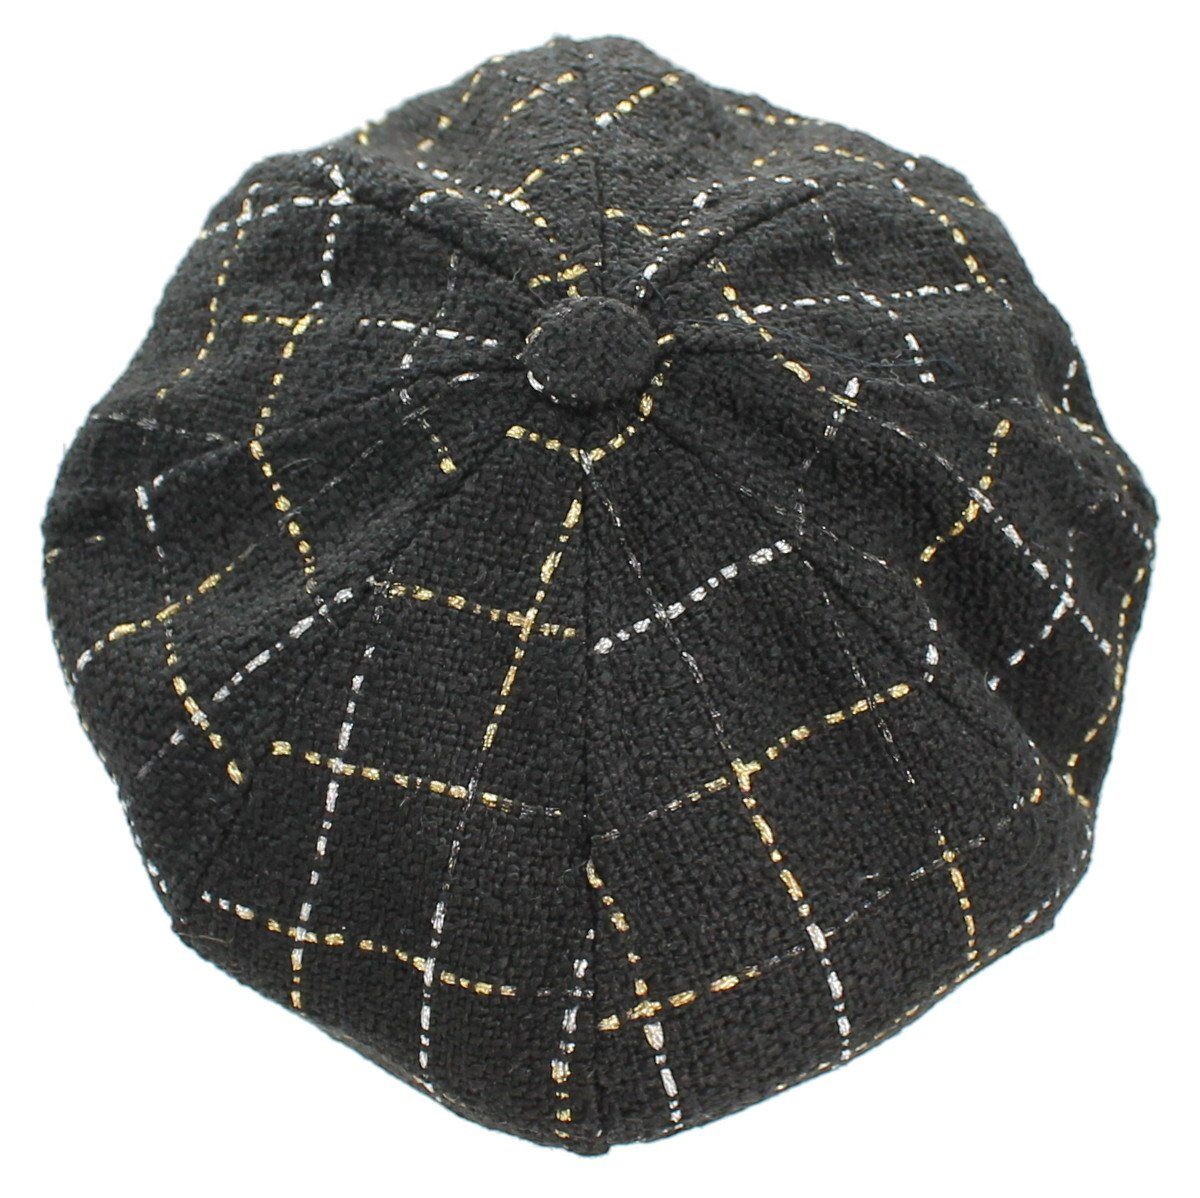 Damen Ballonmütze Muster BM209-Schwarz mit Kappe dy_mode Karo Ballonmütze Mütze Schirmmütze Wintermütze